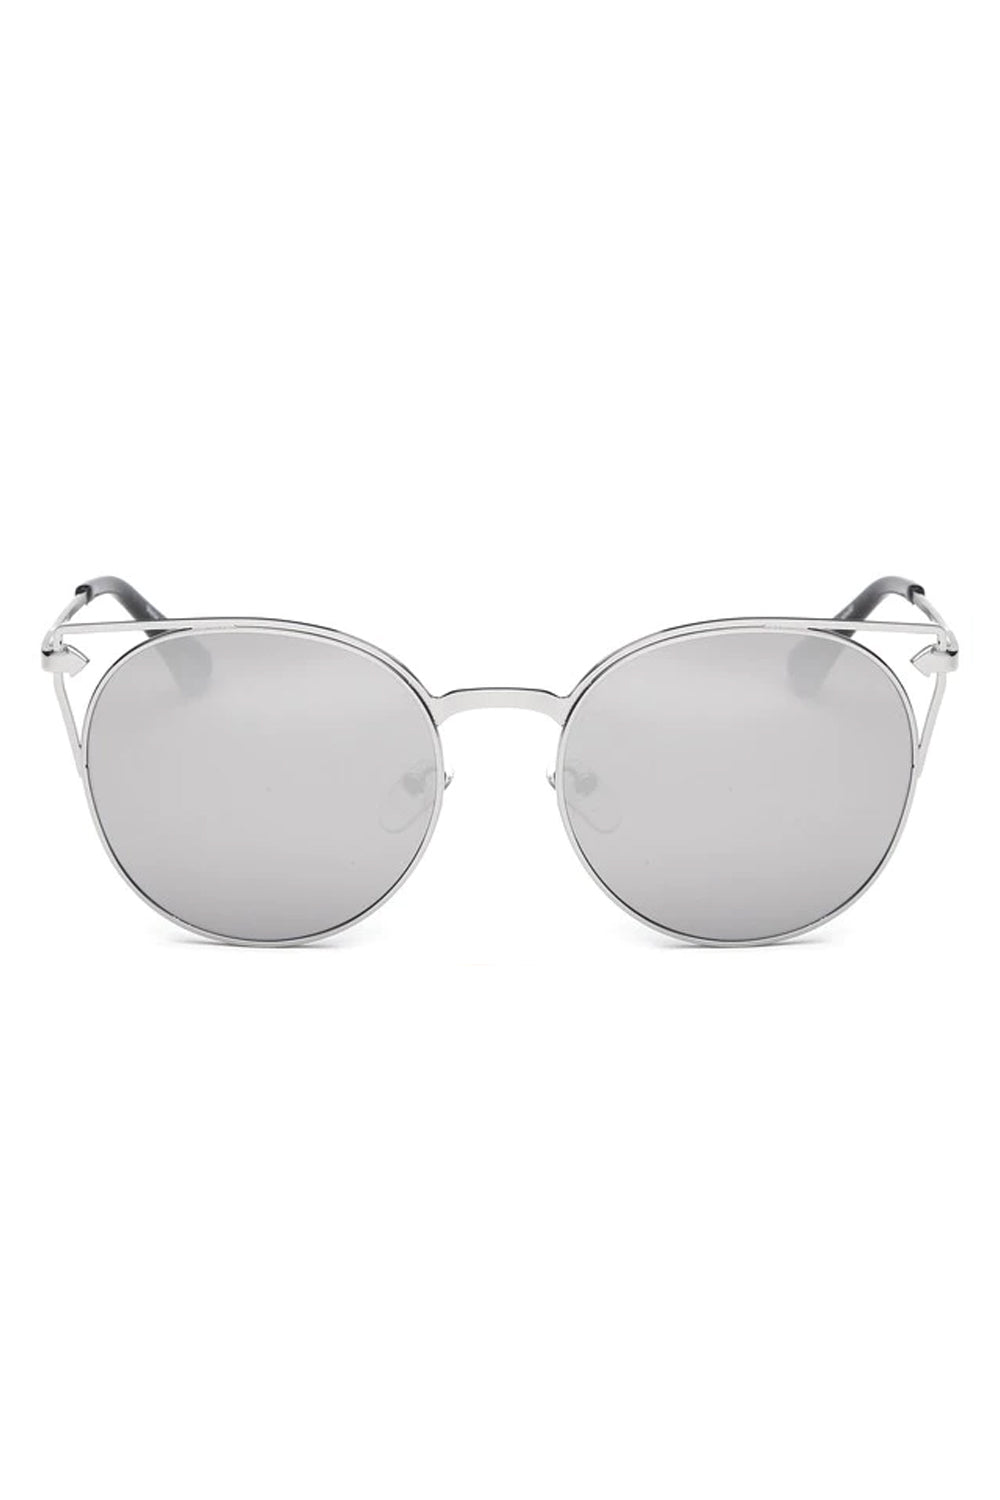 Women Round Cat Eye Fashion Sunglasses